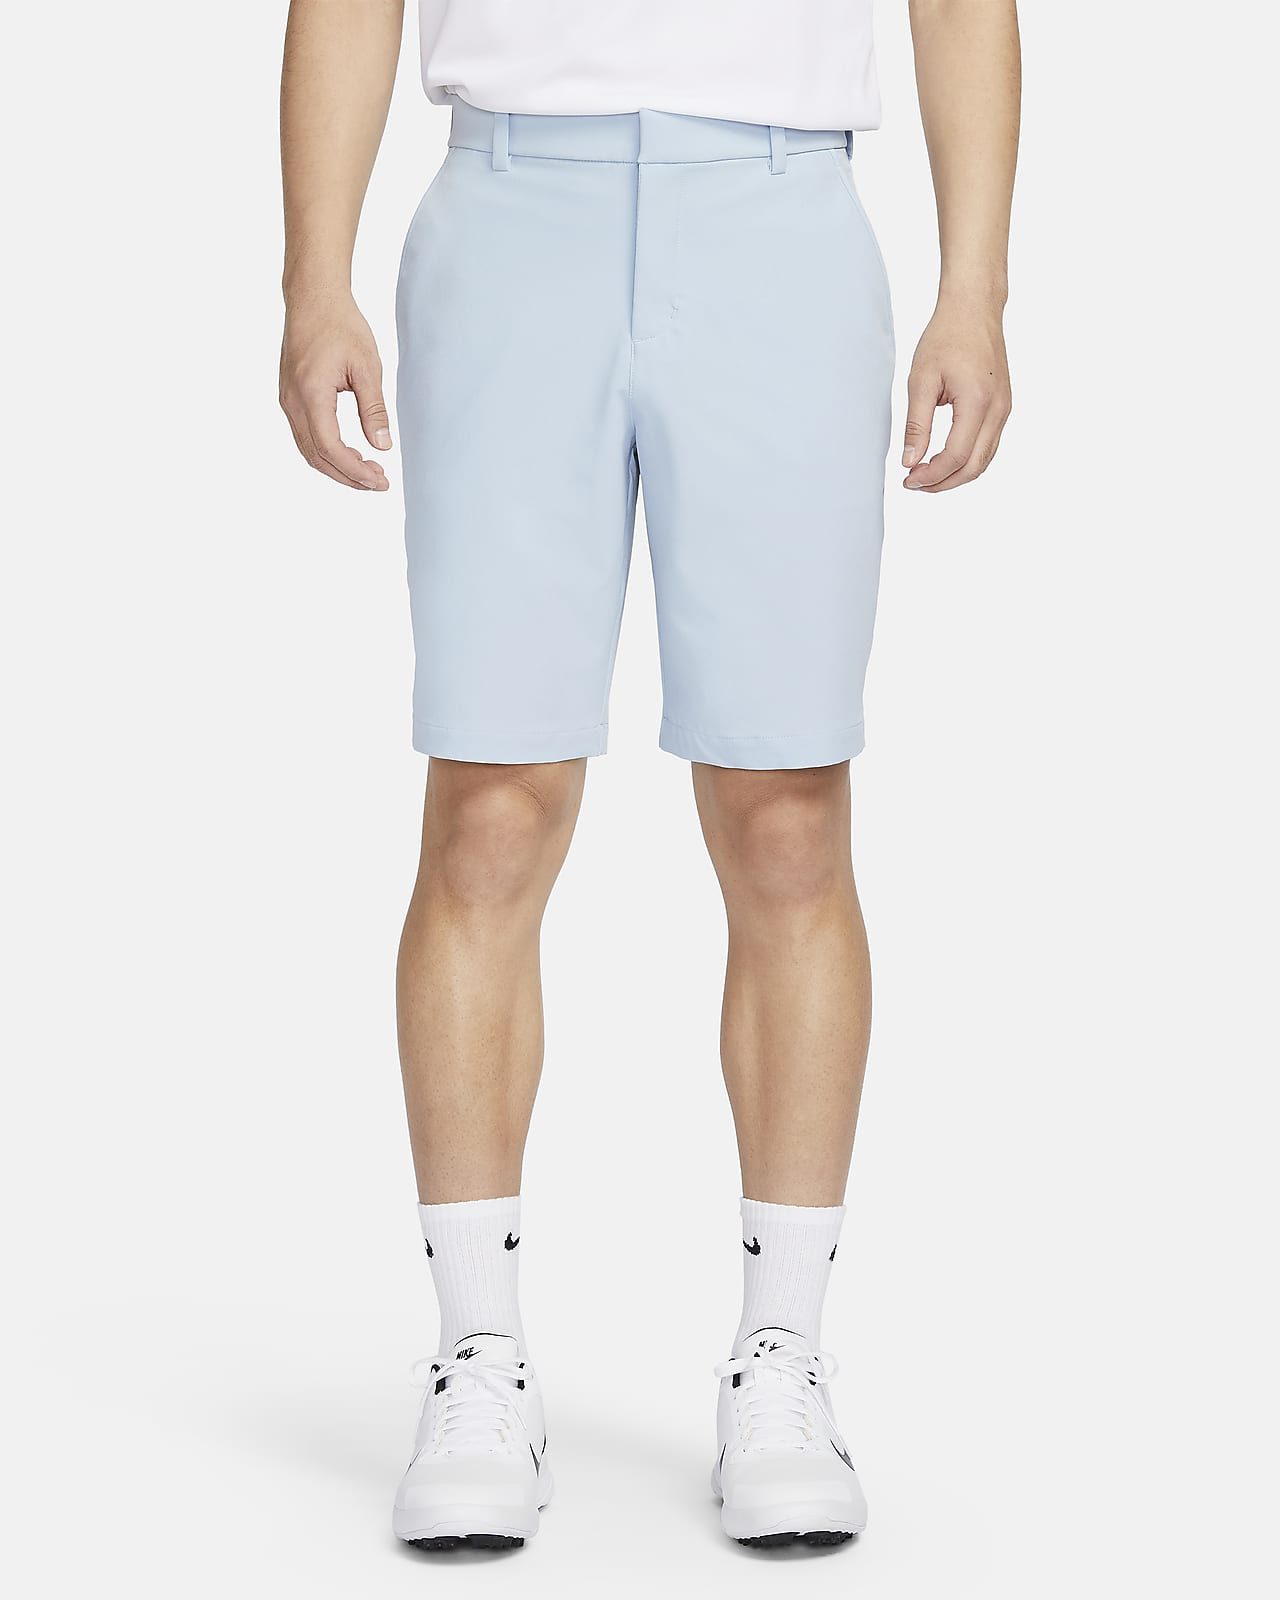 Nike Dri-FIT Men's Golf Shorts